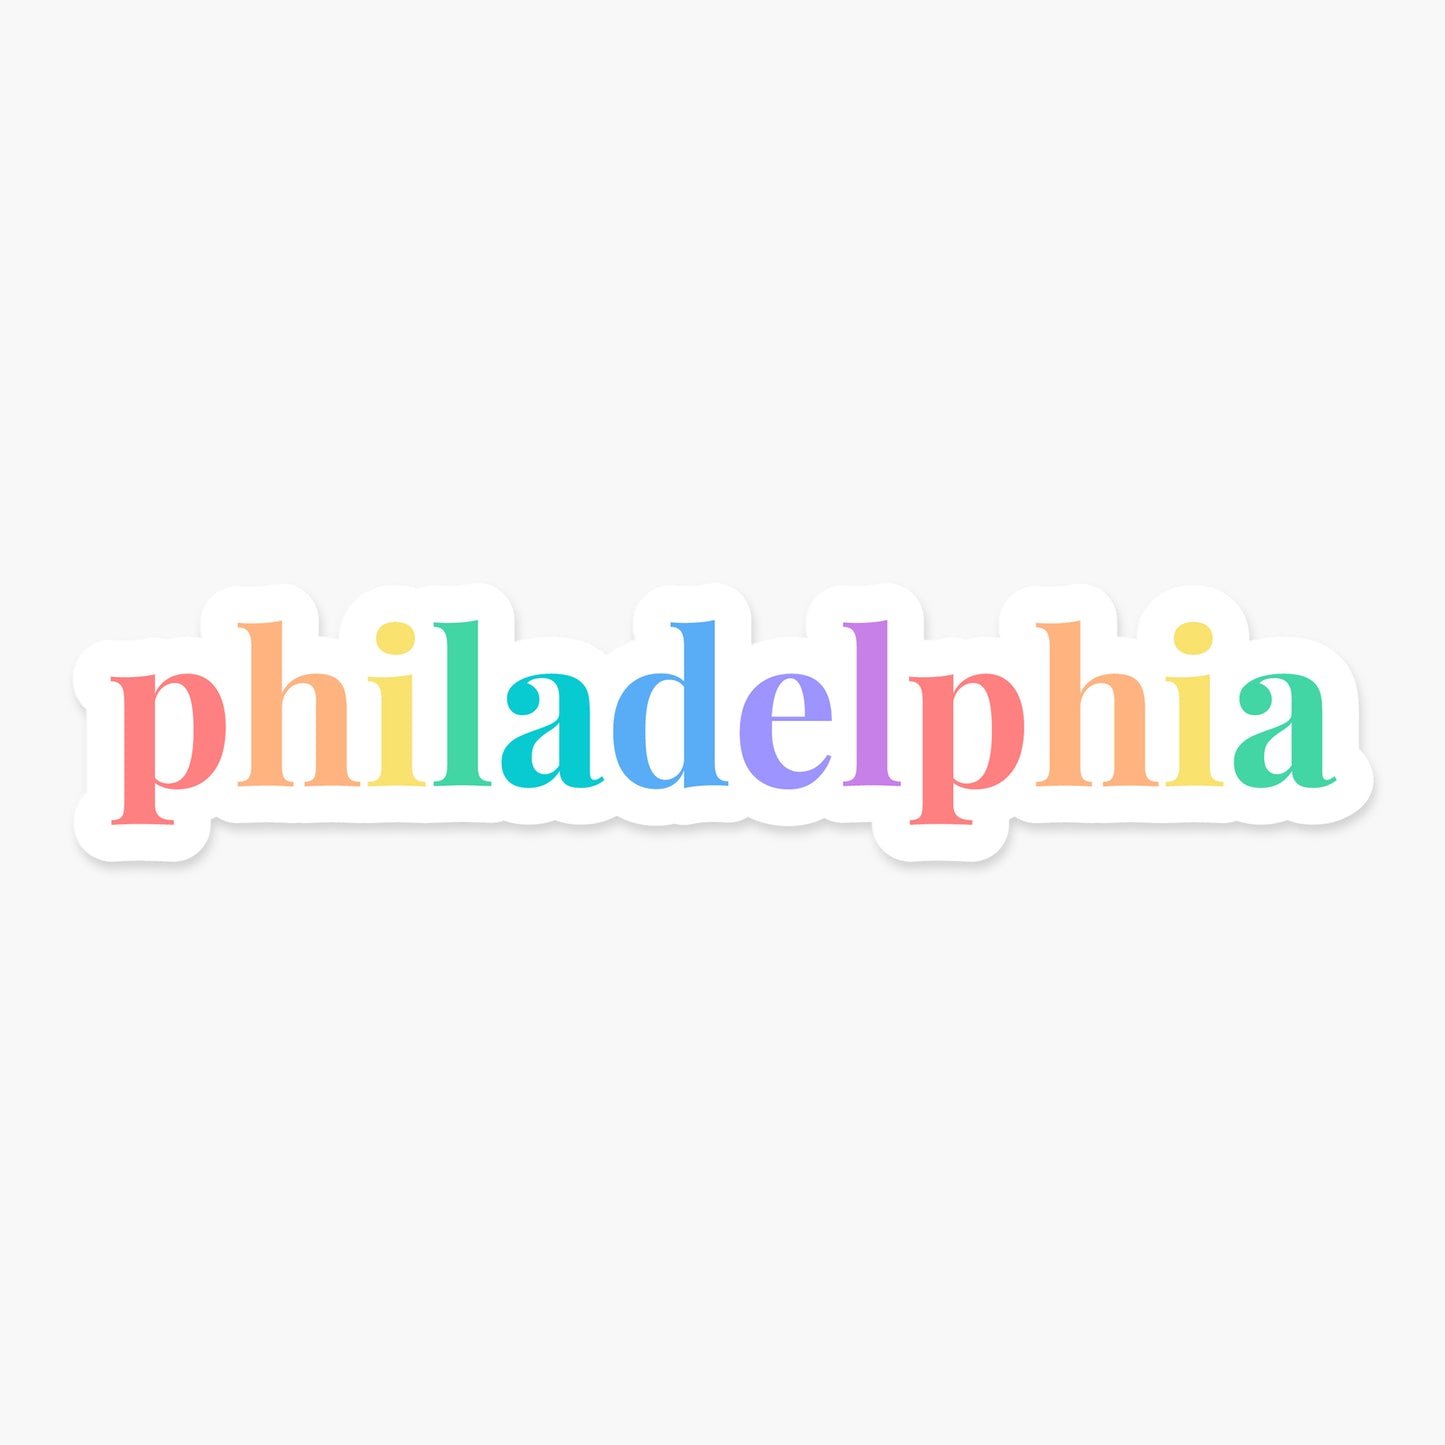 Philadelphia, Pennsylvania - Everyday Sticker | Footnotes Paper